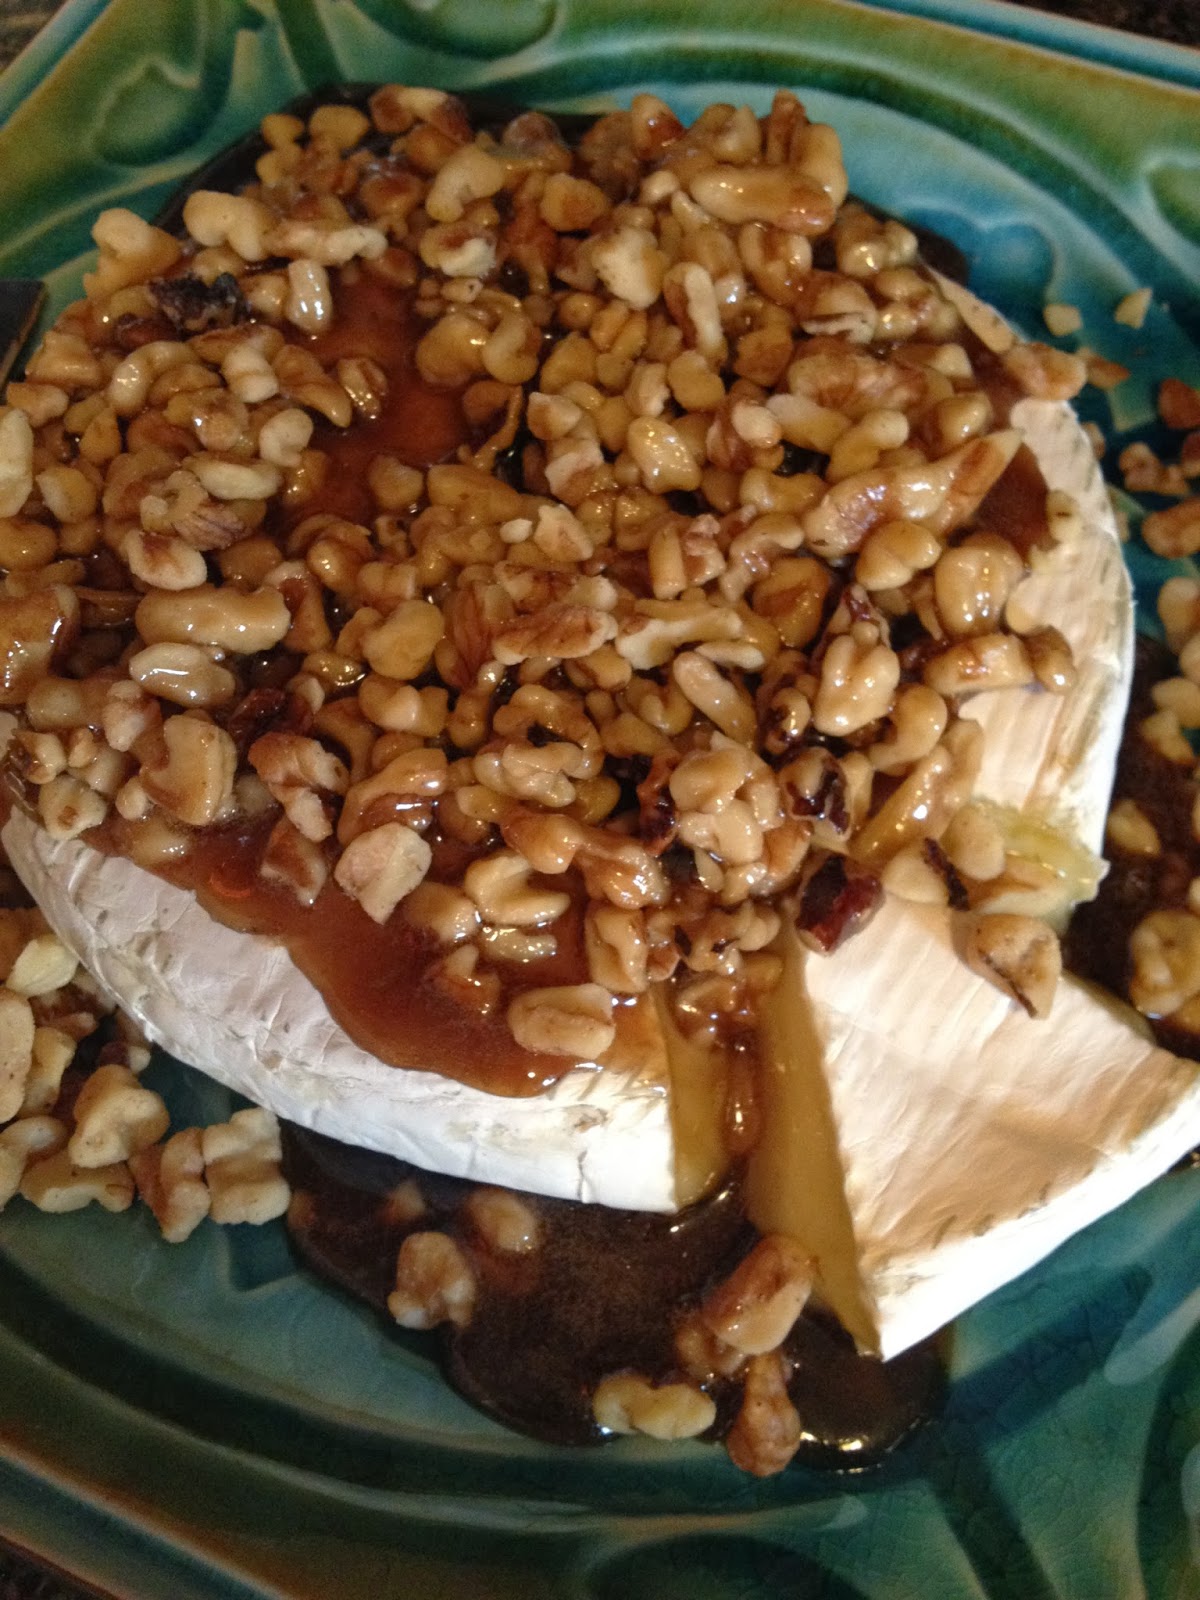 The Classy Cook: Maple Walnut Brie